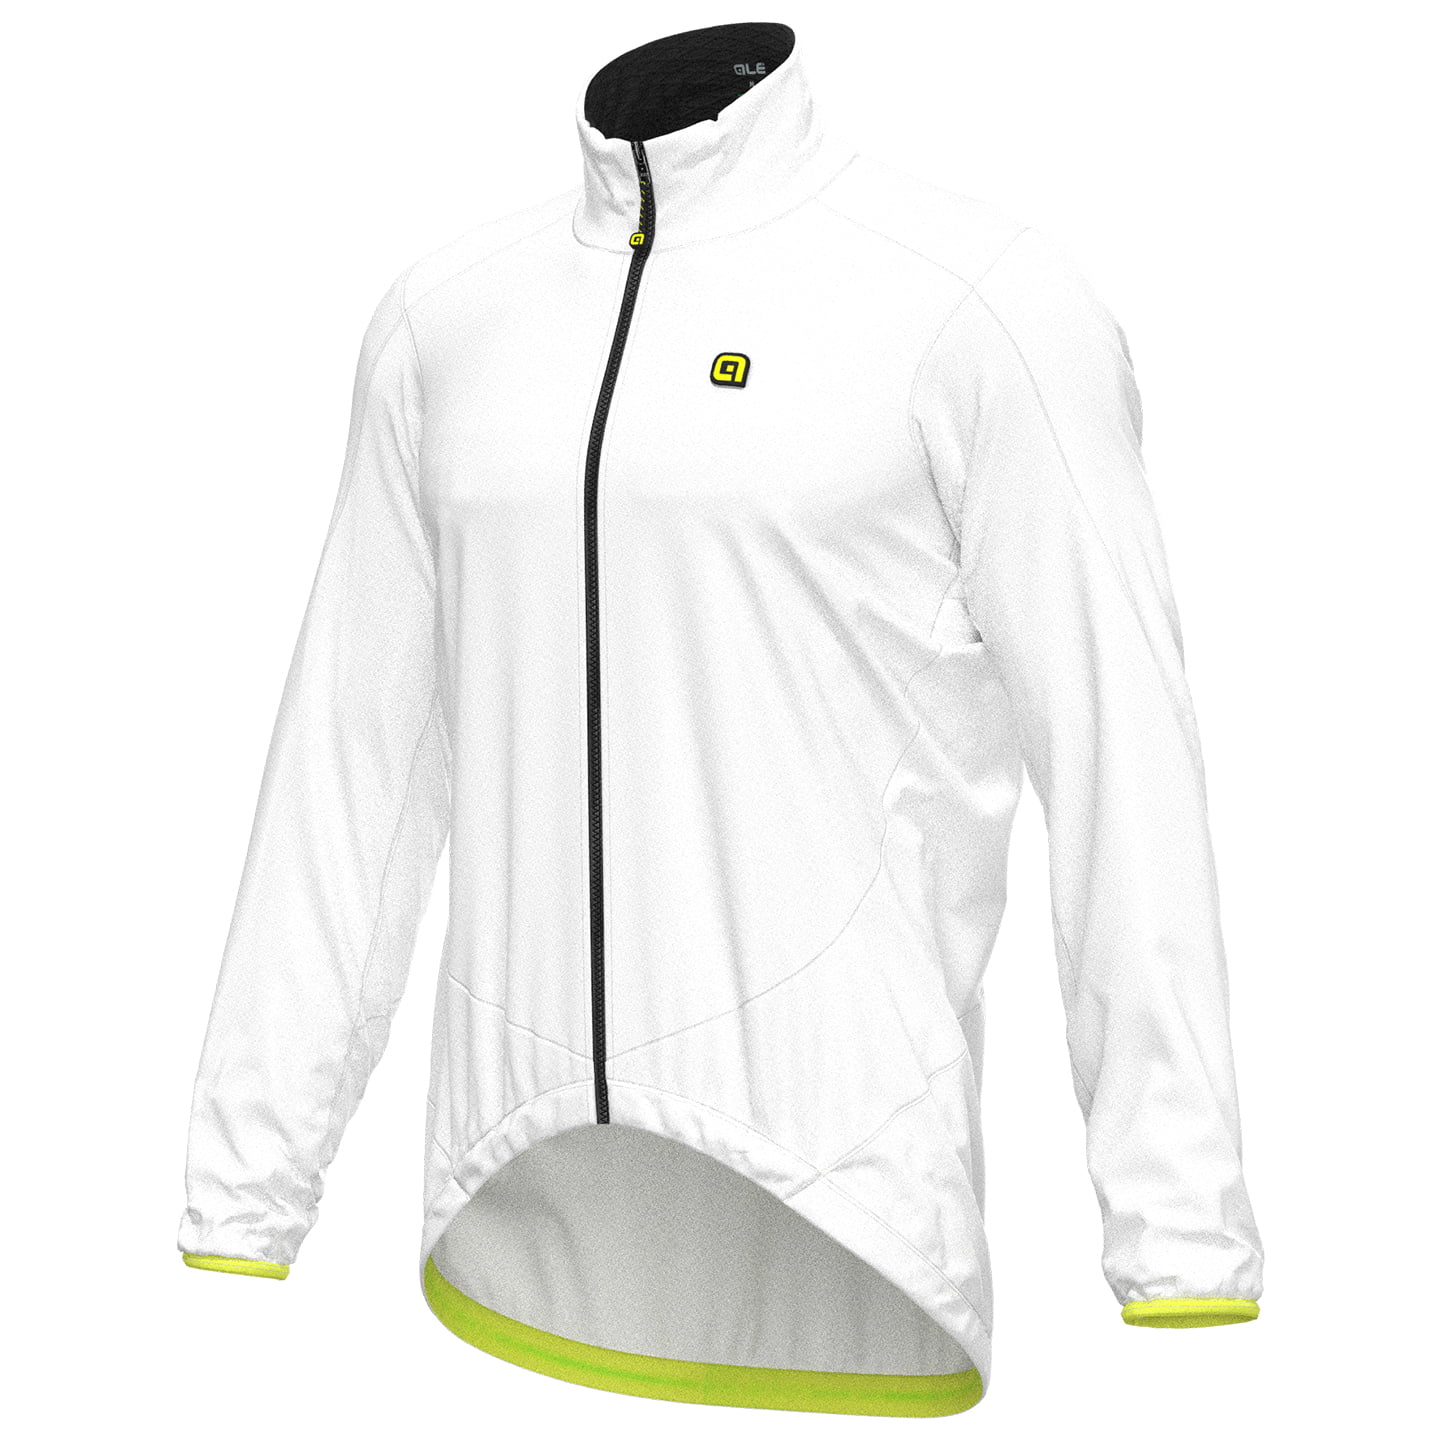 ALE Light Pack Wind Jacket Wind Jacket, for men, size M, Bike jacket, Cycling clothing